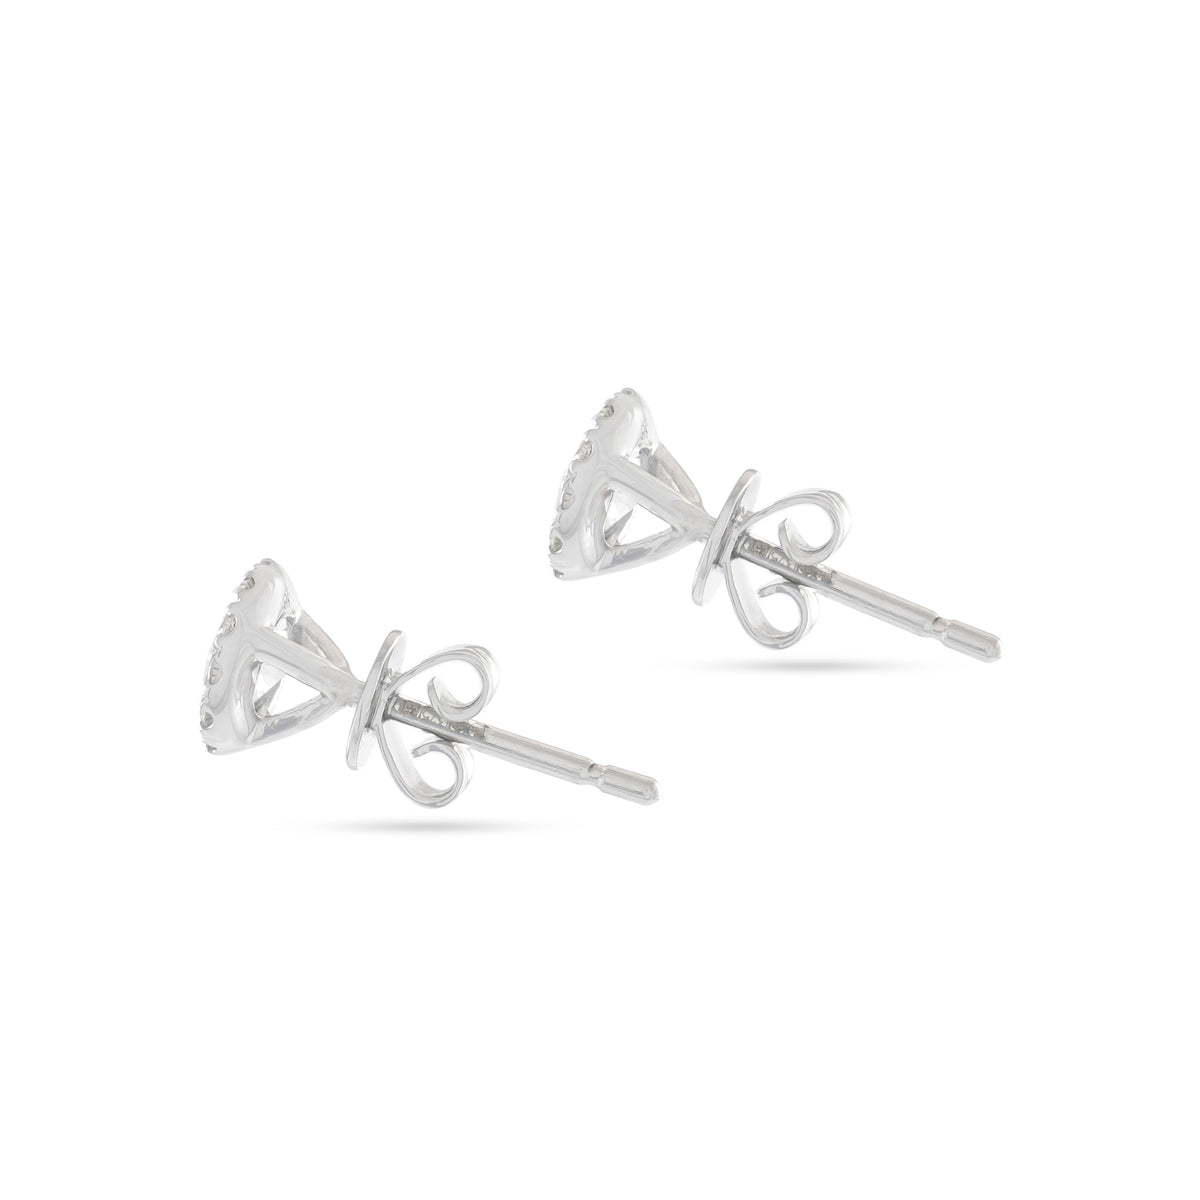 9ct White Gold Diamond Halo Stud Earrings